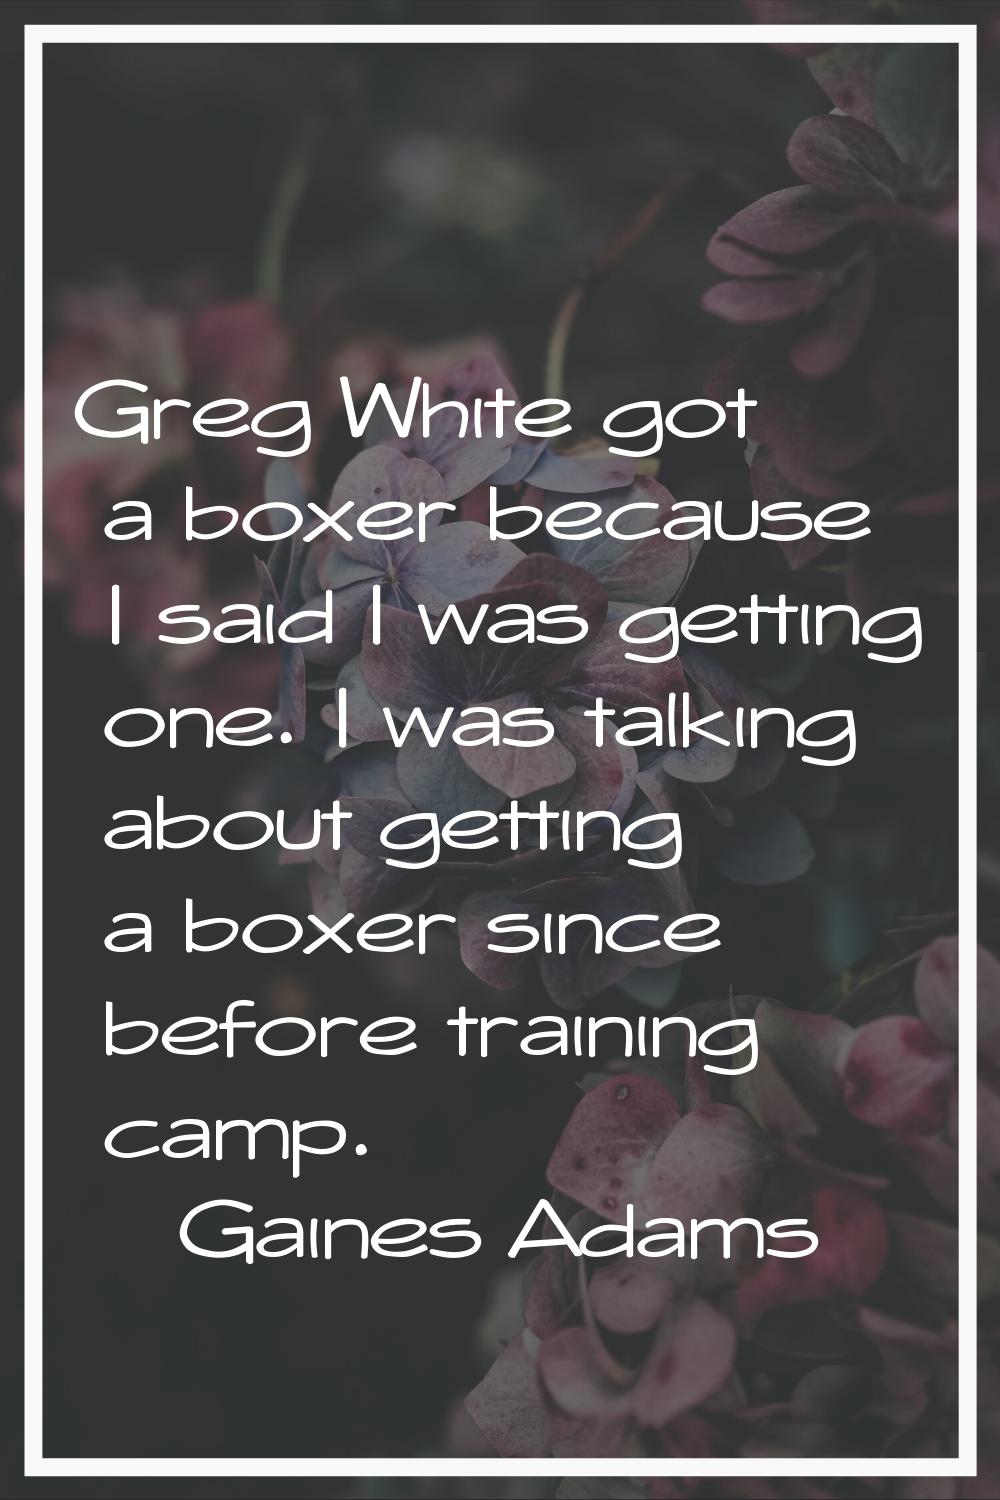 Greg White got a boxer because I said I was getting one. I was talking about getting a boxer since 